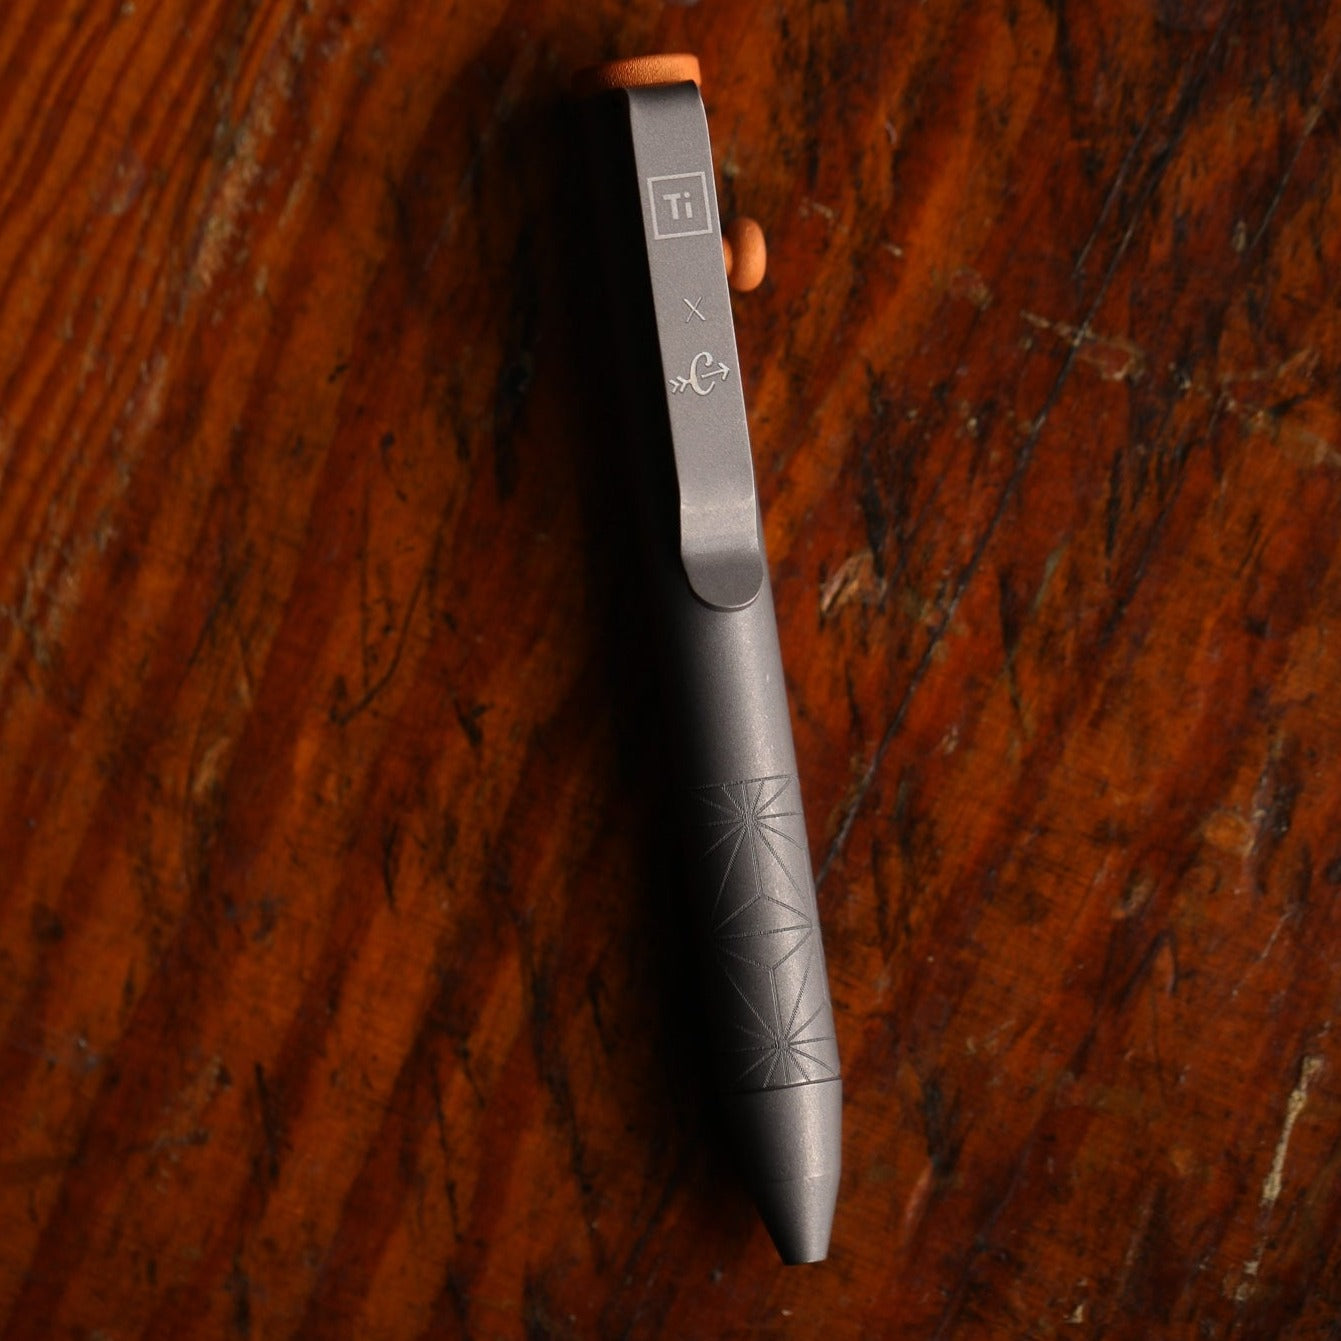 Big Idea Design X Carryology Bolt Action Pens *Limited Release*